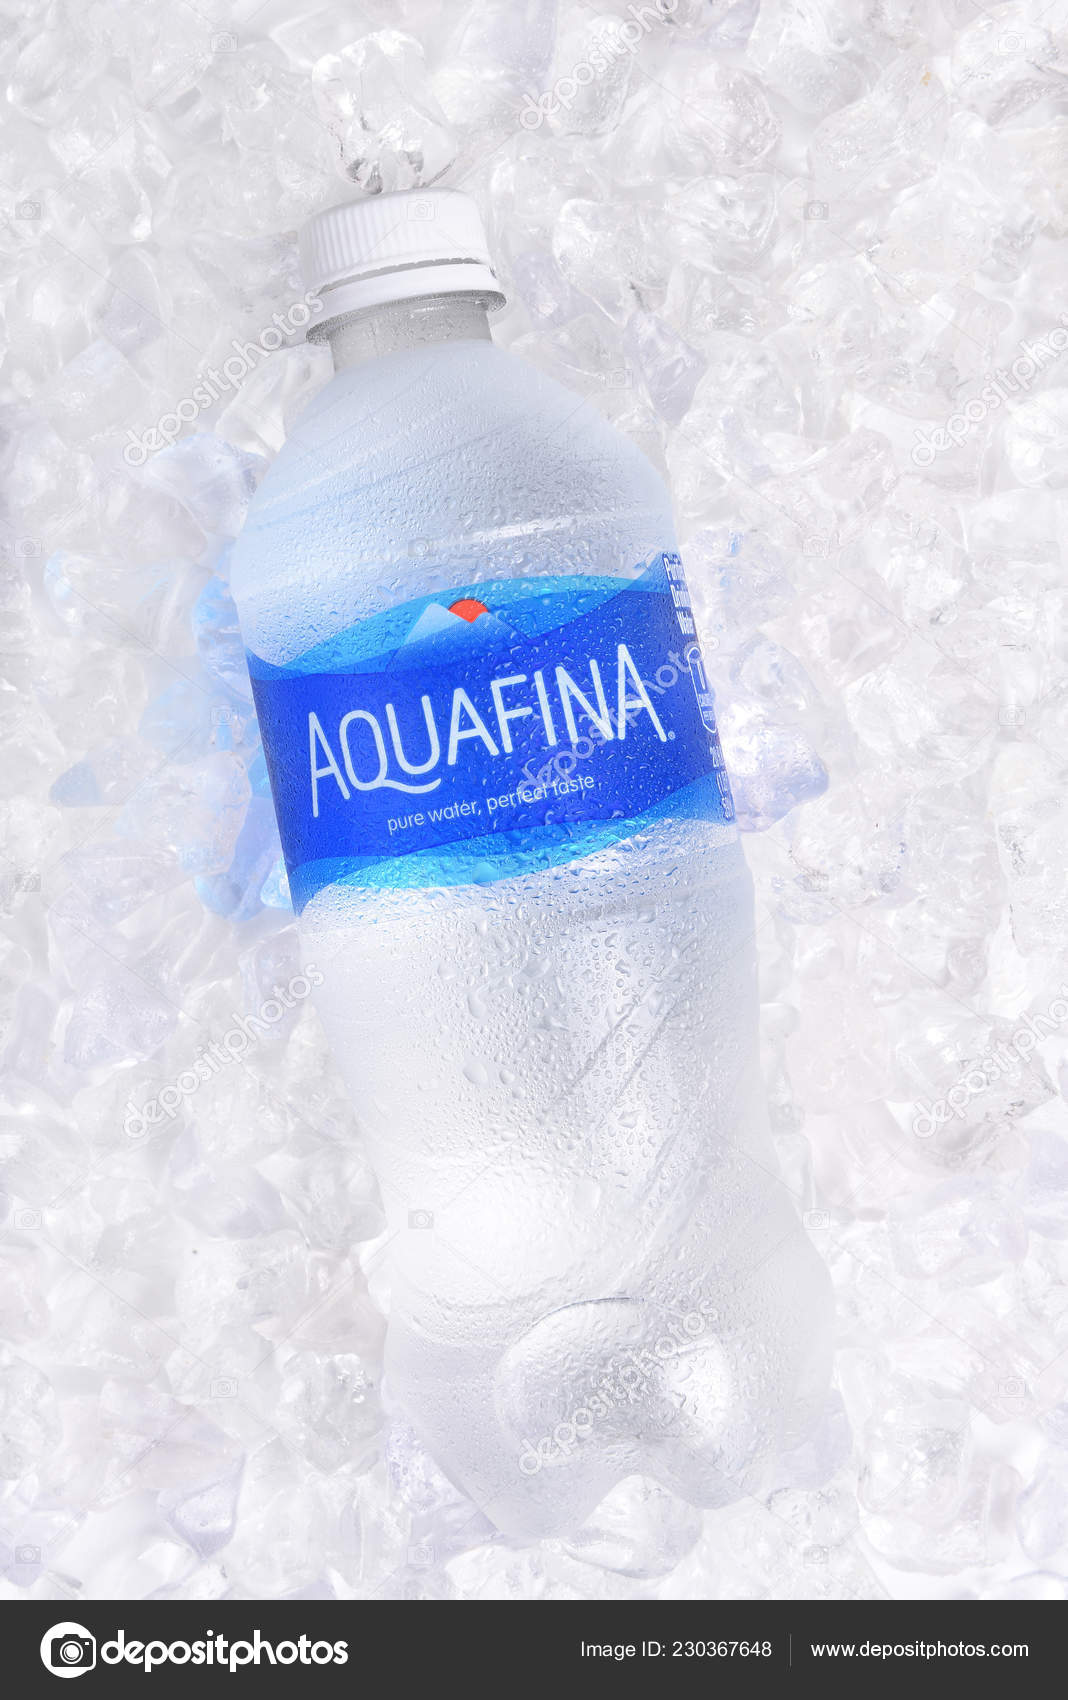 flavored bottled water brands